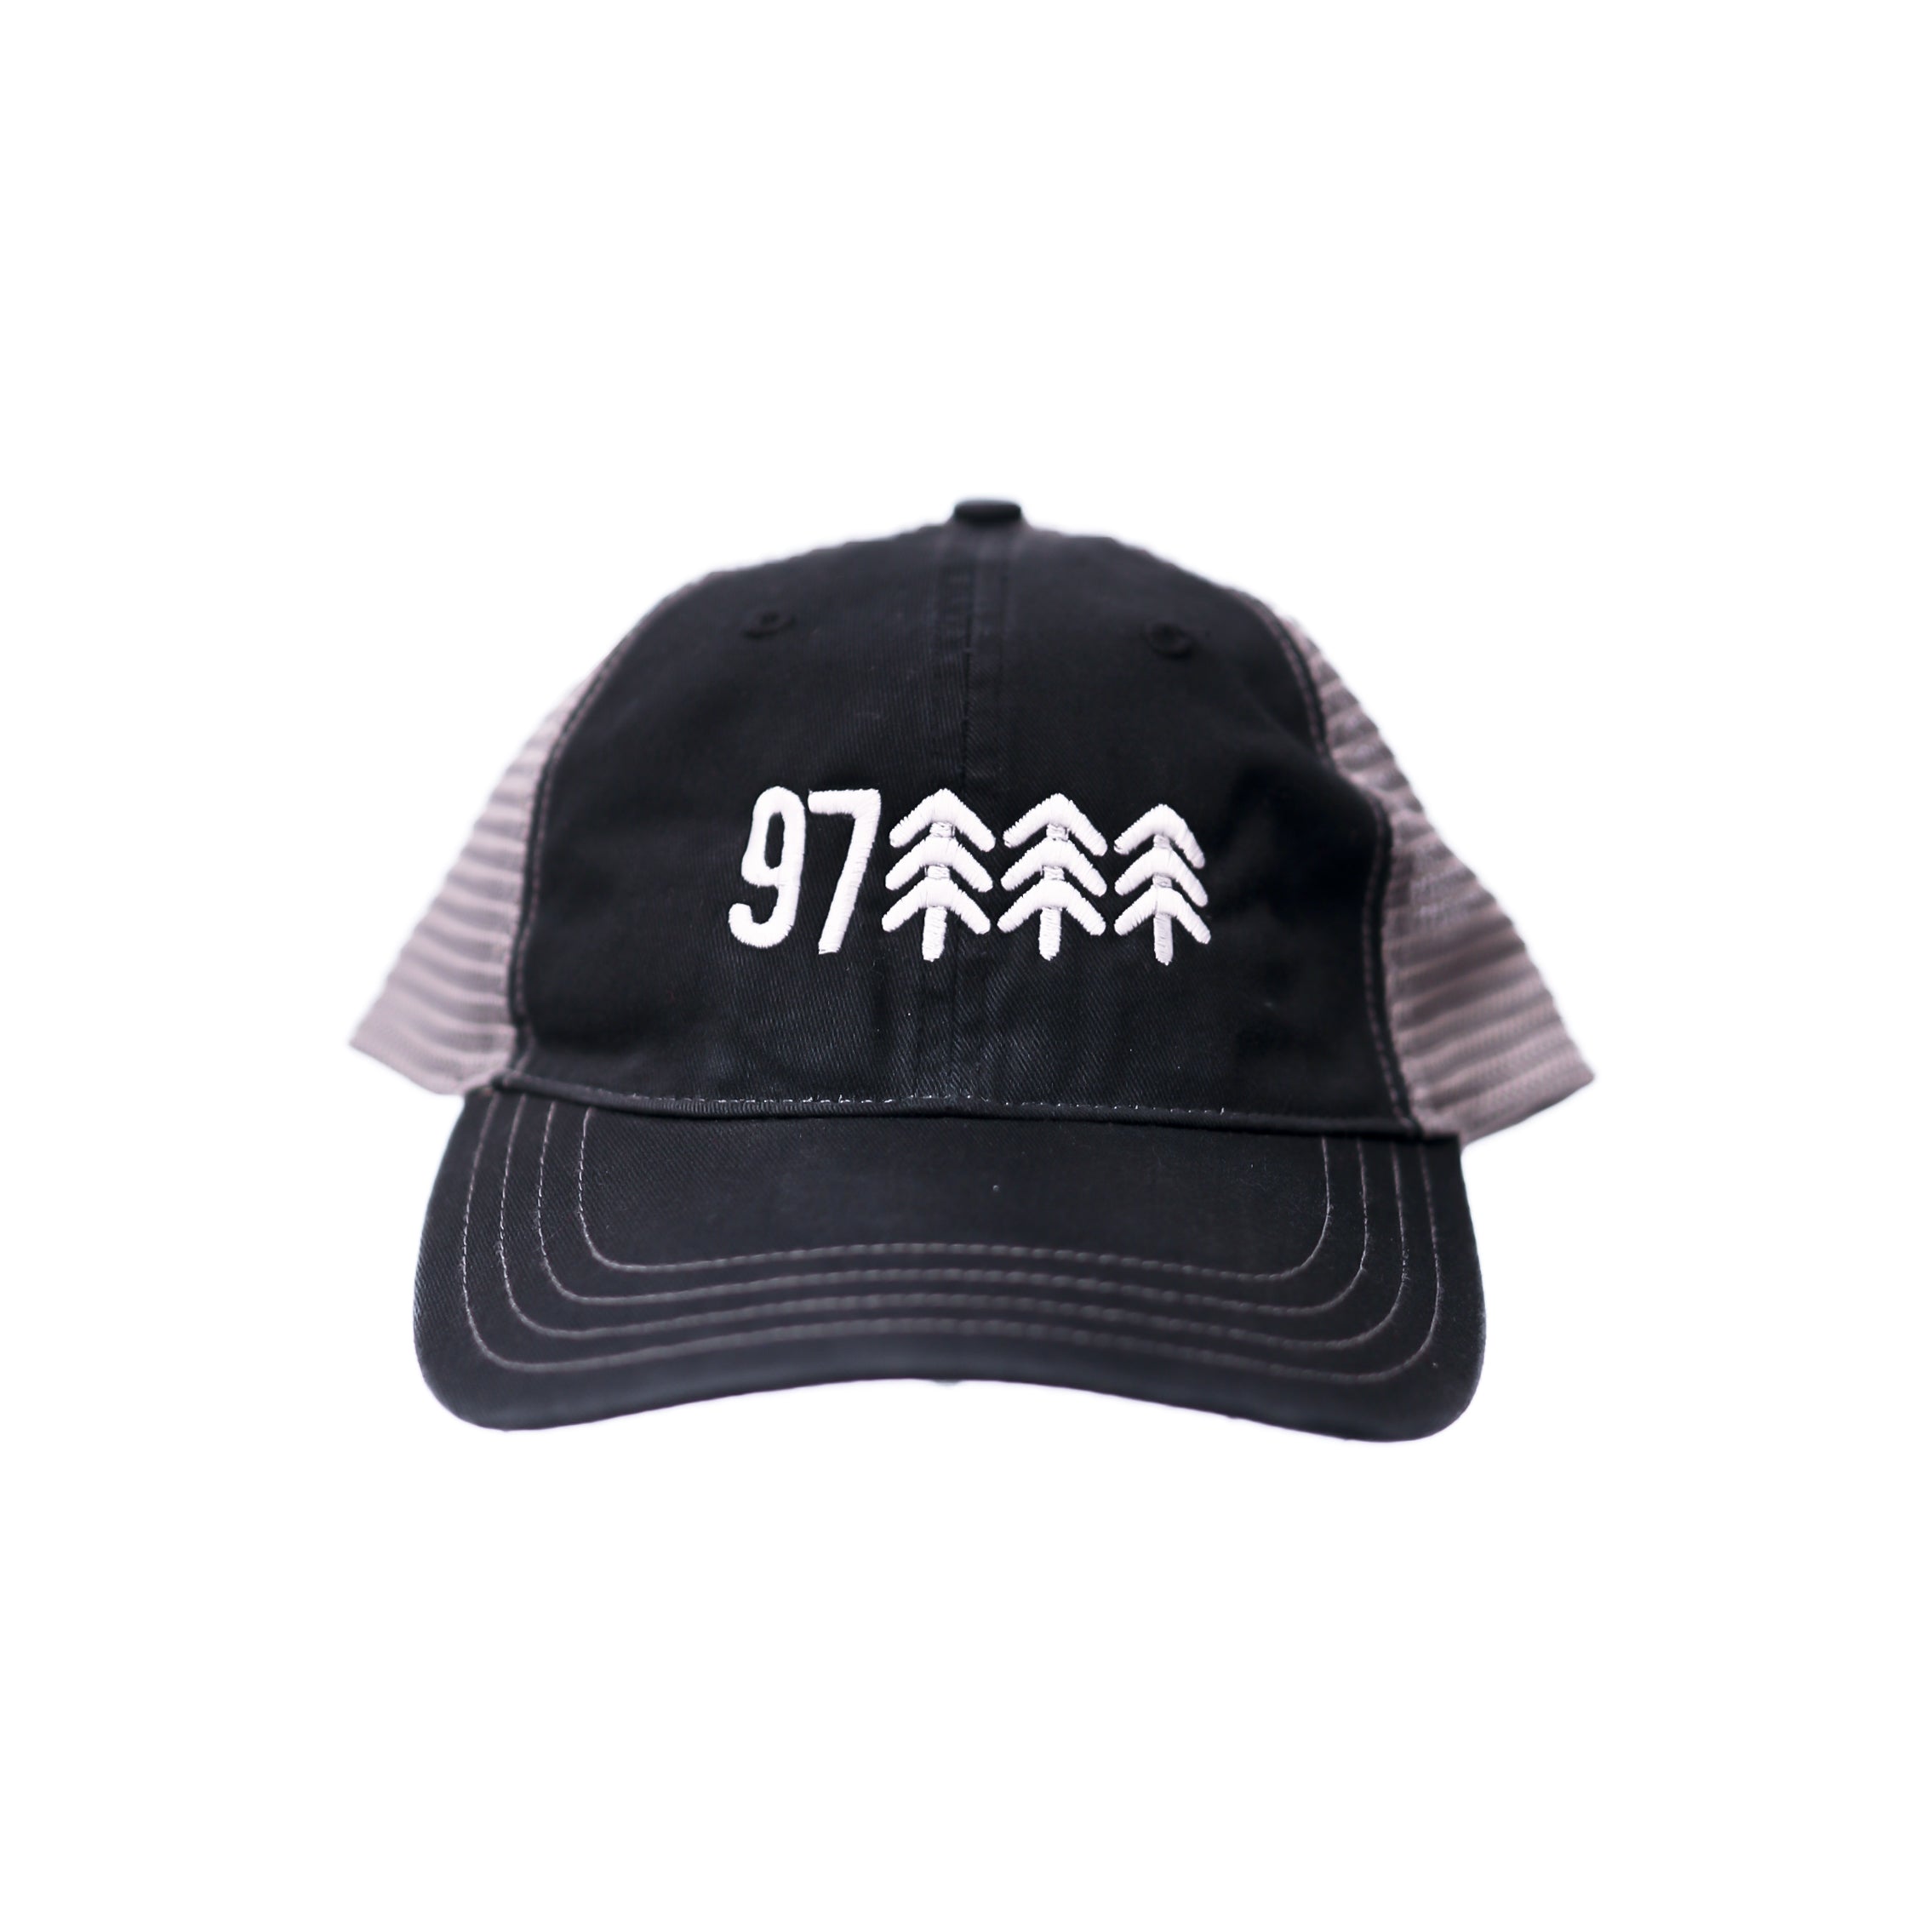 97🌲🌲🌲 Vintage Mesh Trucker Hat